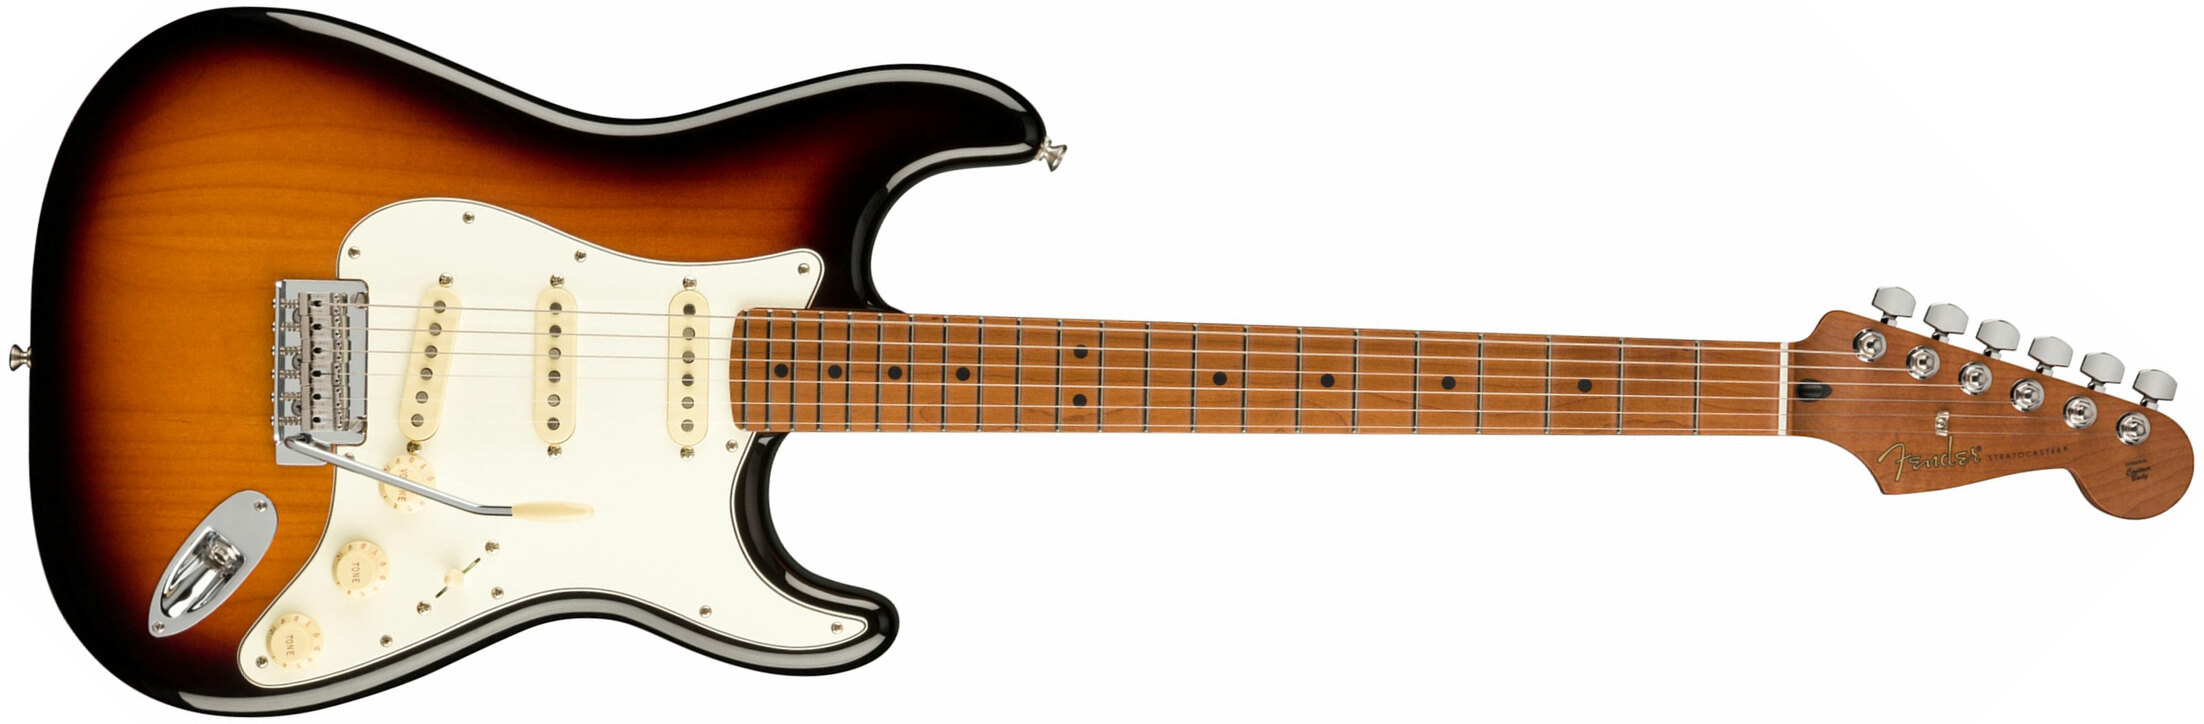 Fender Strat Player 1959 Texas Special Ltd Mex 3s Mn - 2-color Sunburst - Str shape electric guitar - Main picture